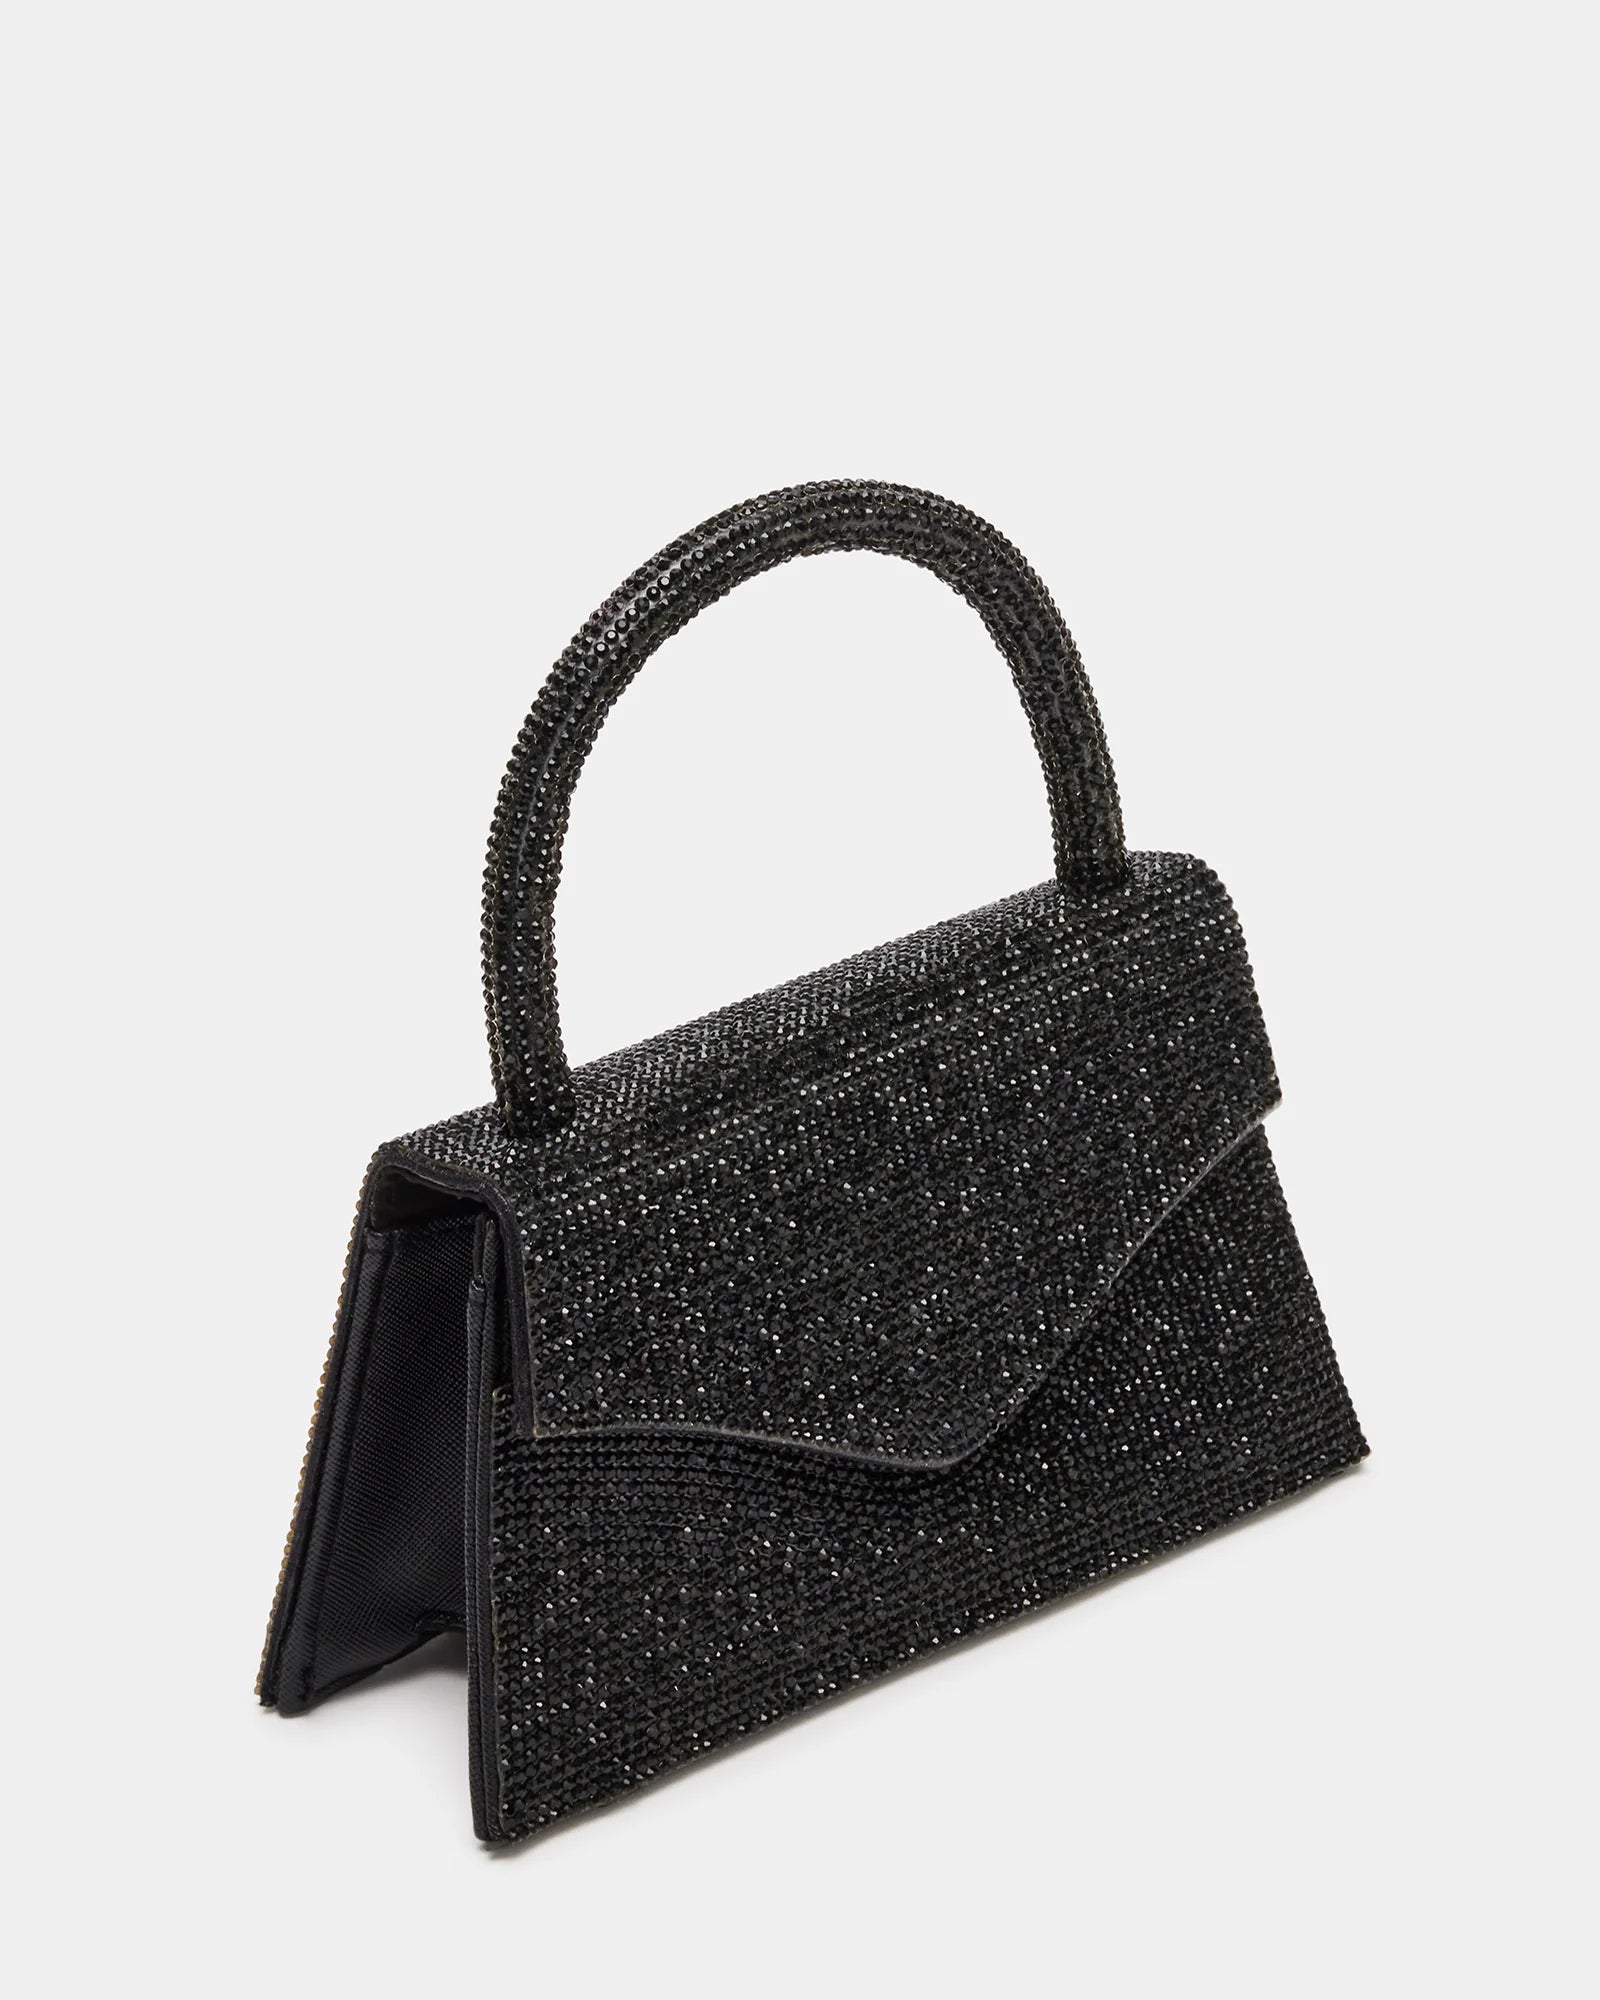 Cueen Black Rhinestone Handbag